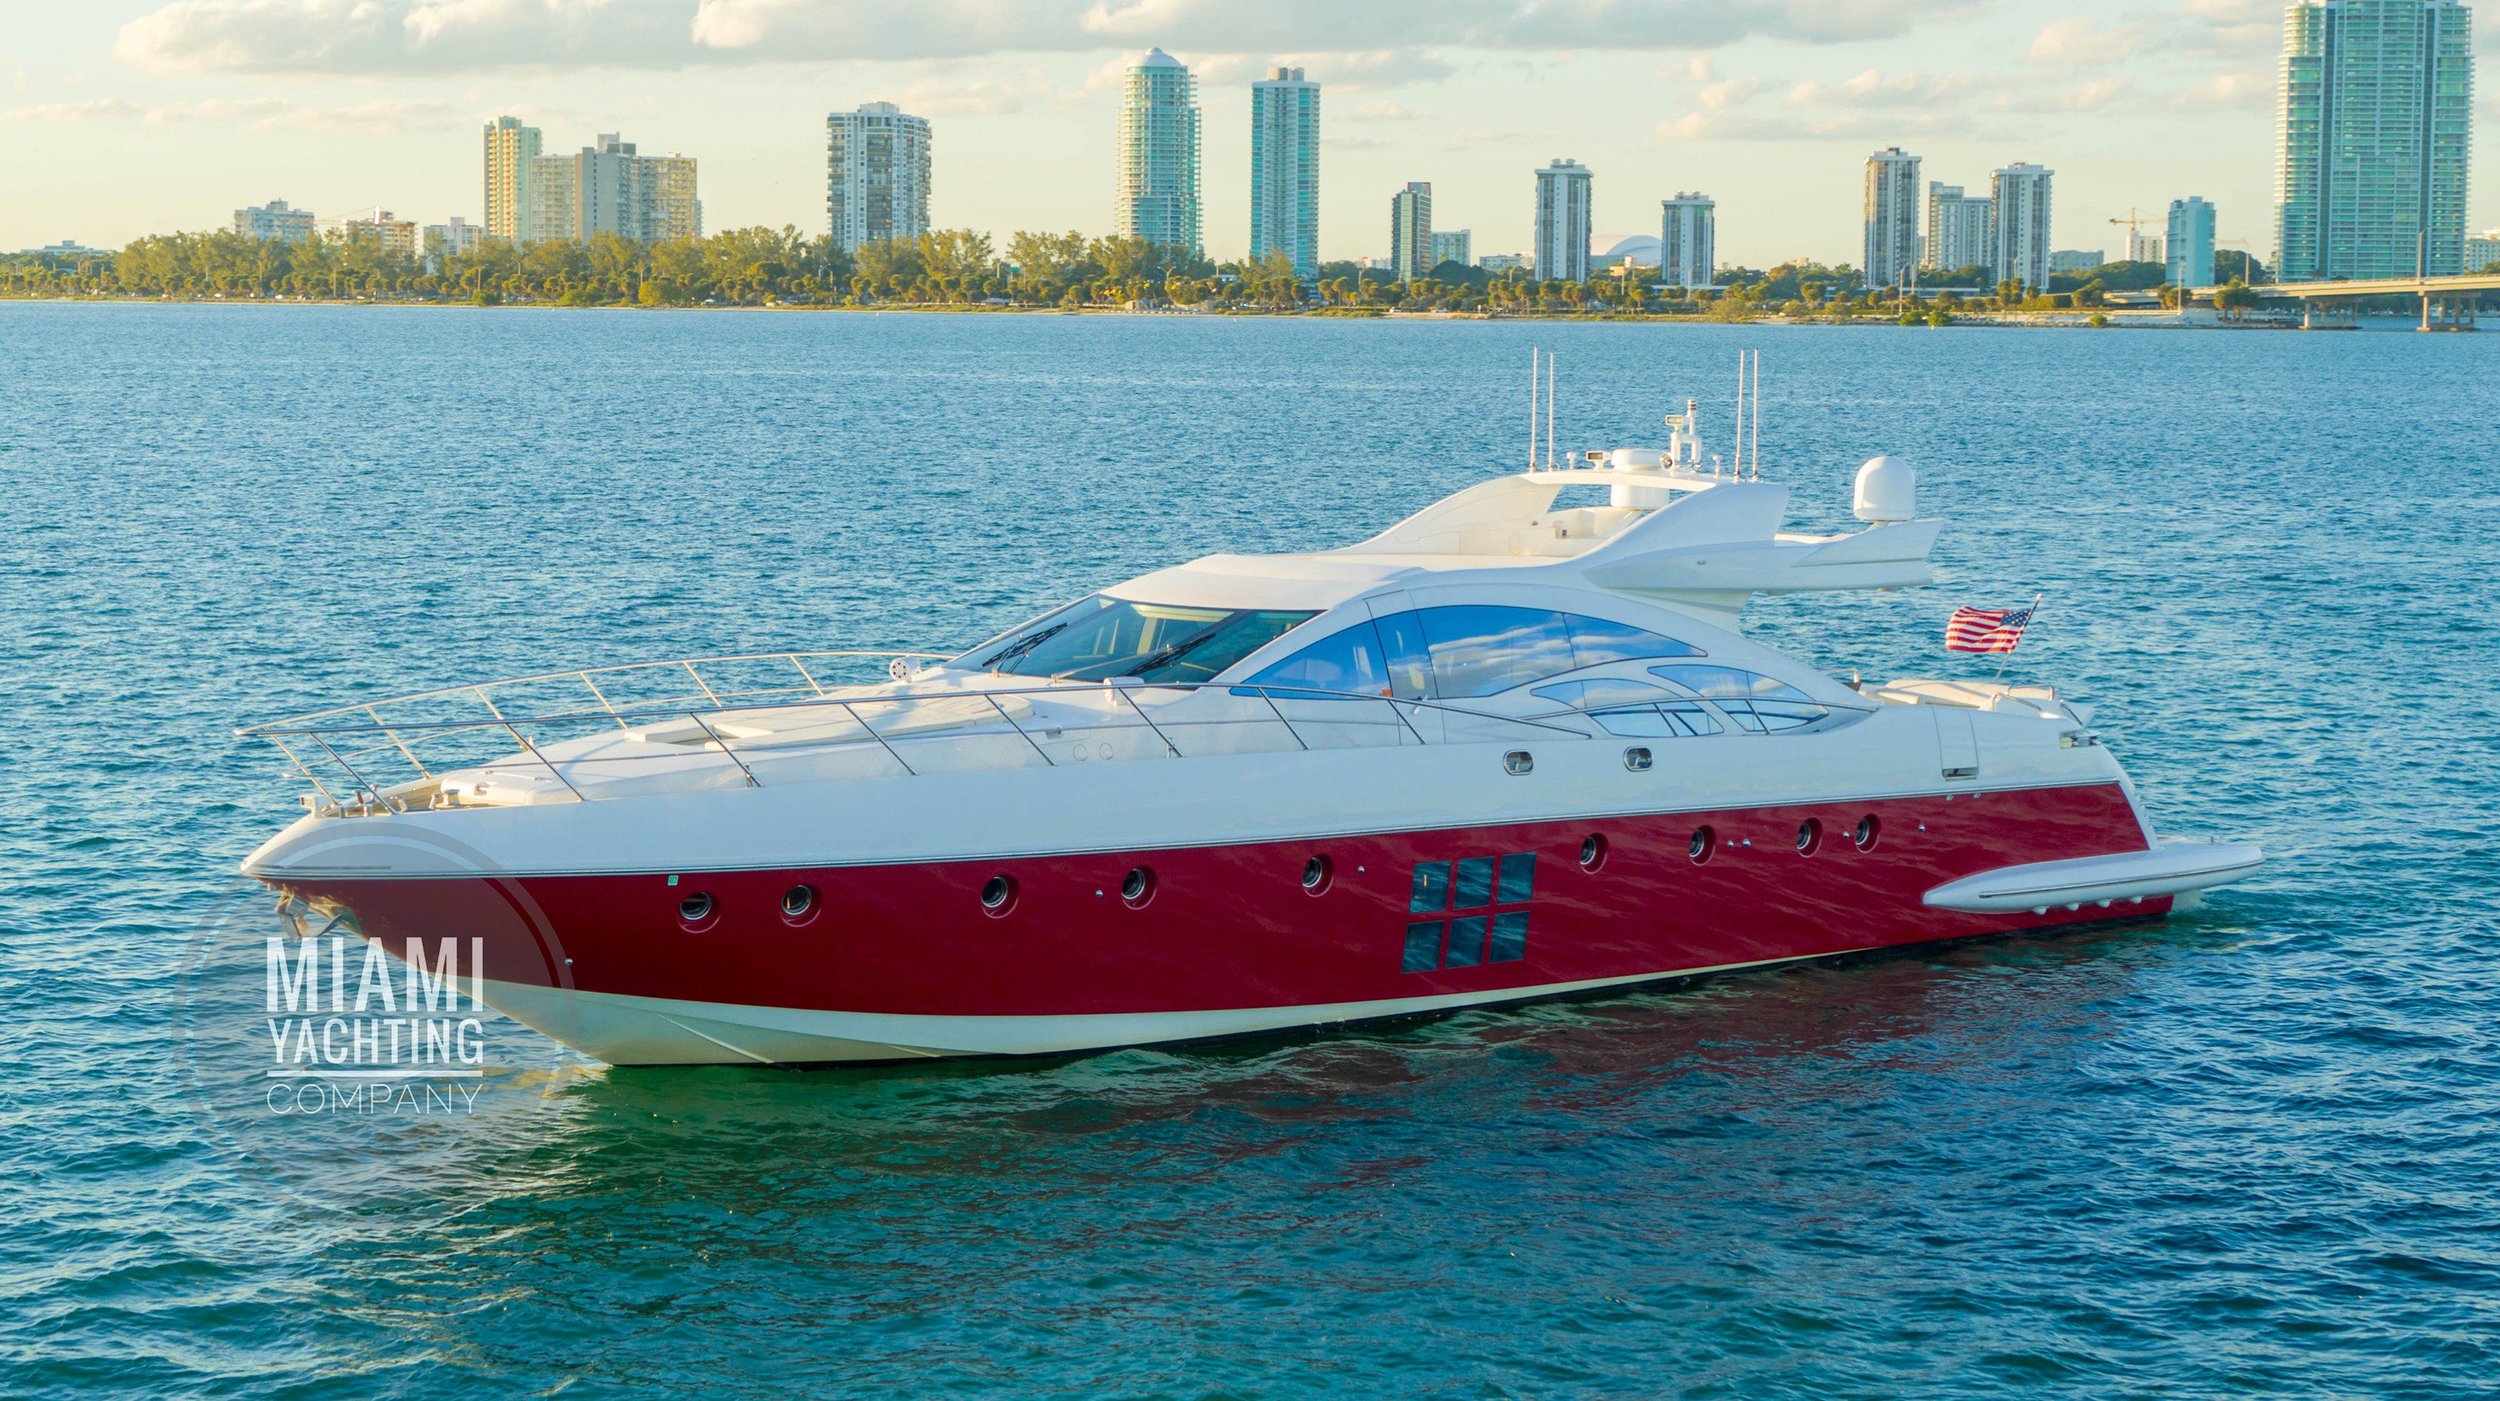 Miami_Yachting_Company_86s_Azimut10.jpg